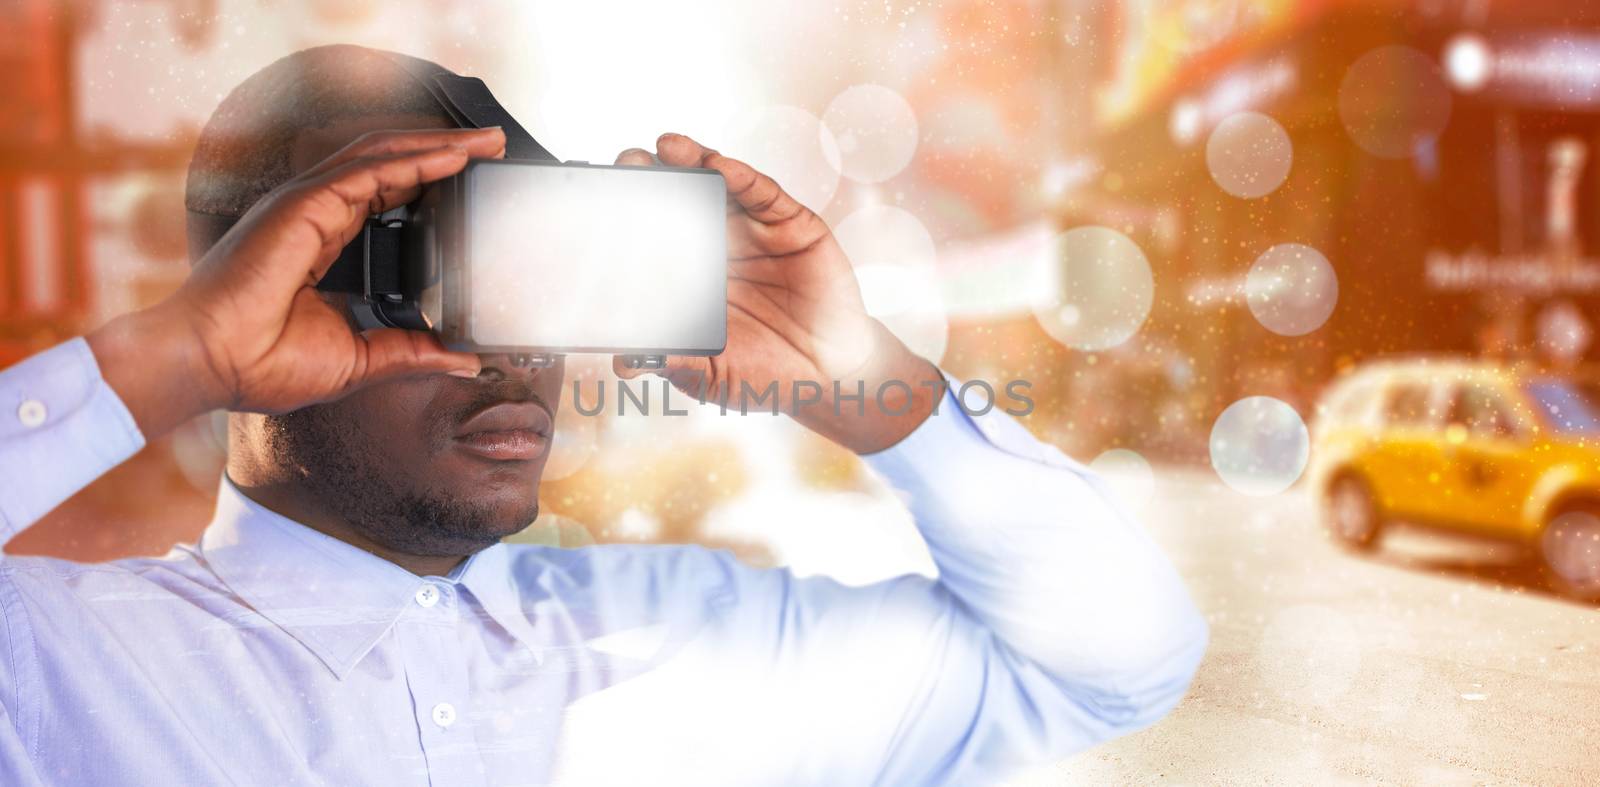 Man holding virtual reality headset against blurry new york street